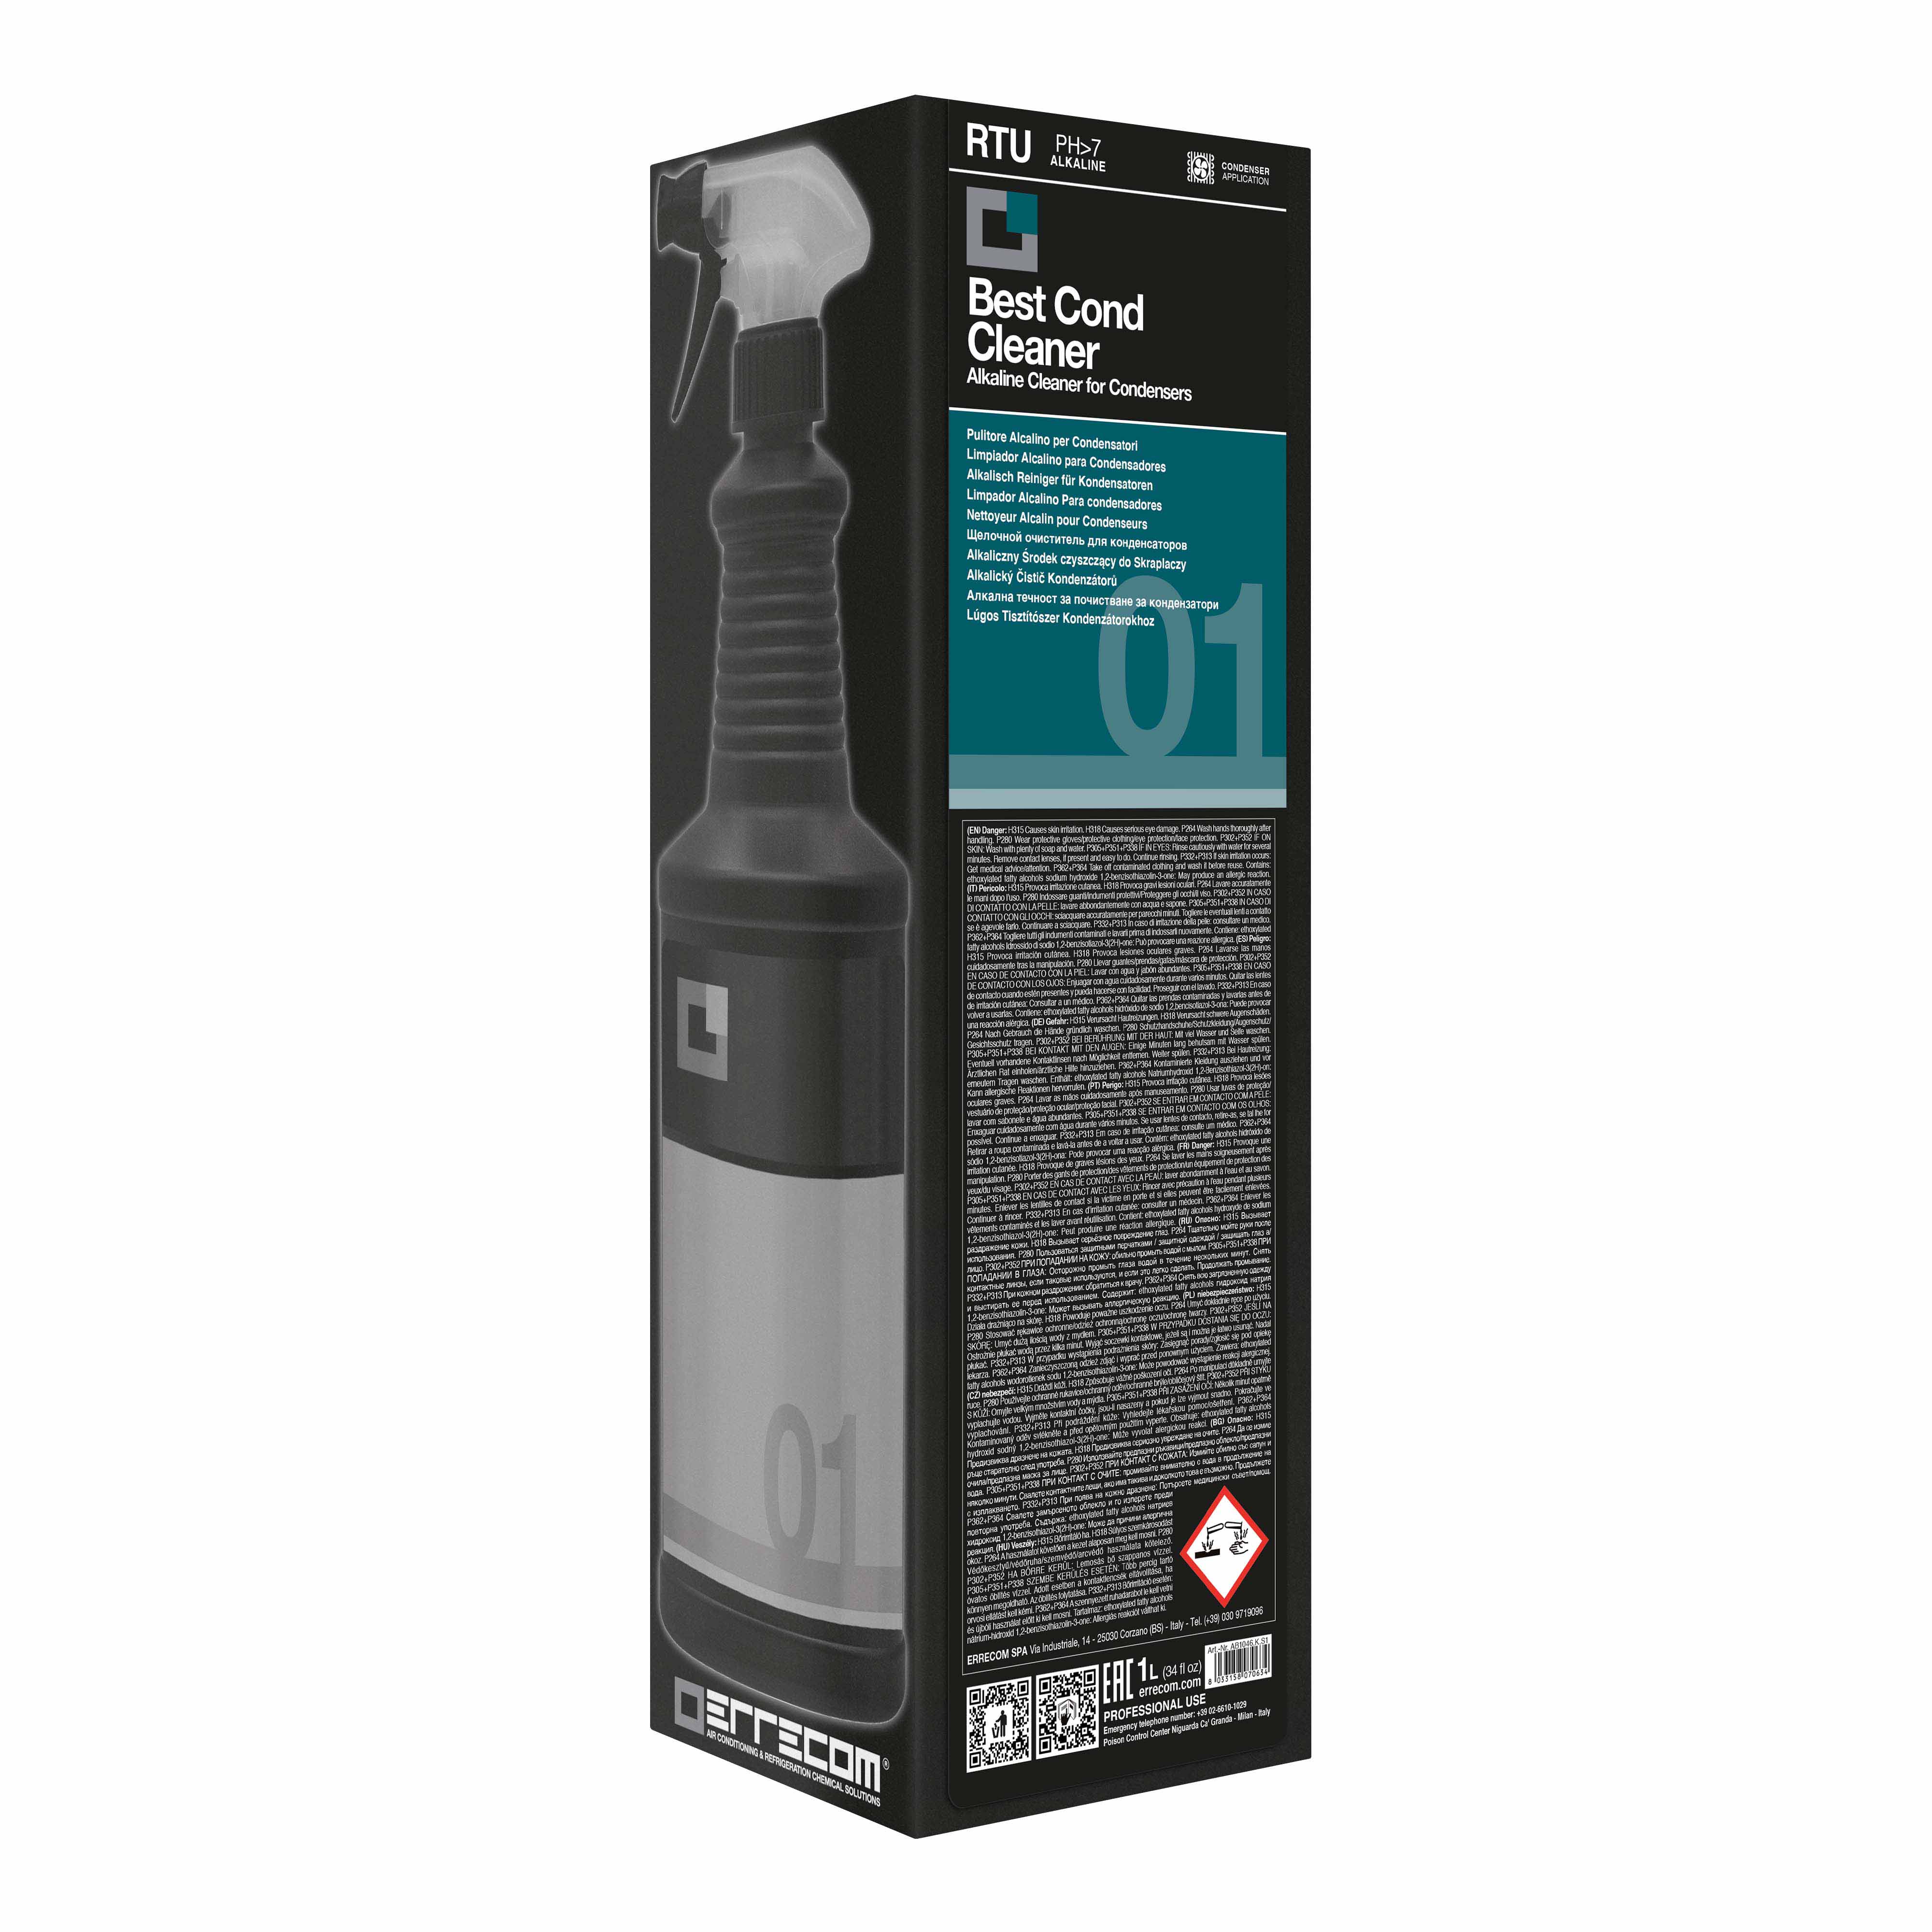 6 x Pulitore Alcalino Spray per Condensatori - BEST COND CLEANER - 1 lt - Confezione n° 6 pz. - Foto 2